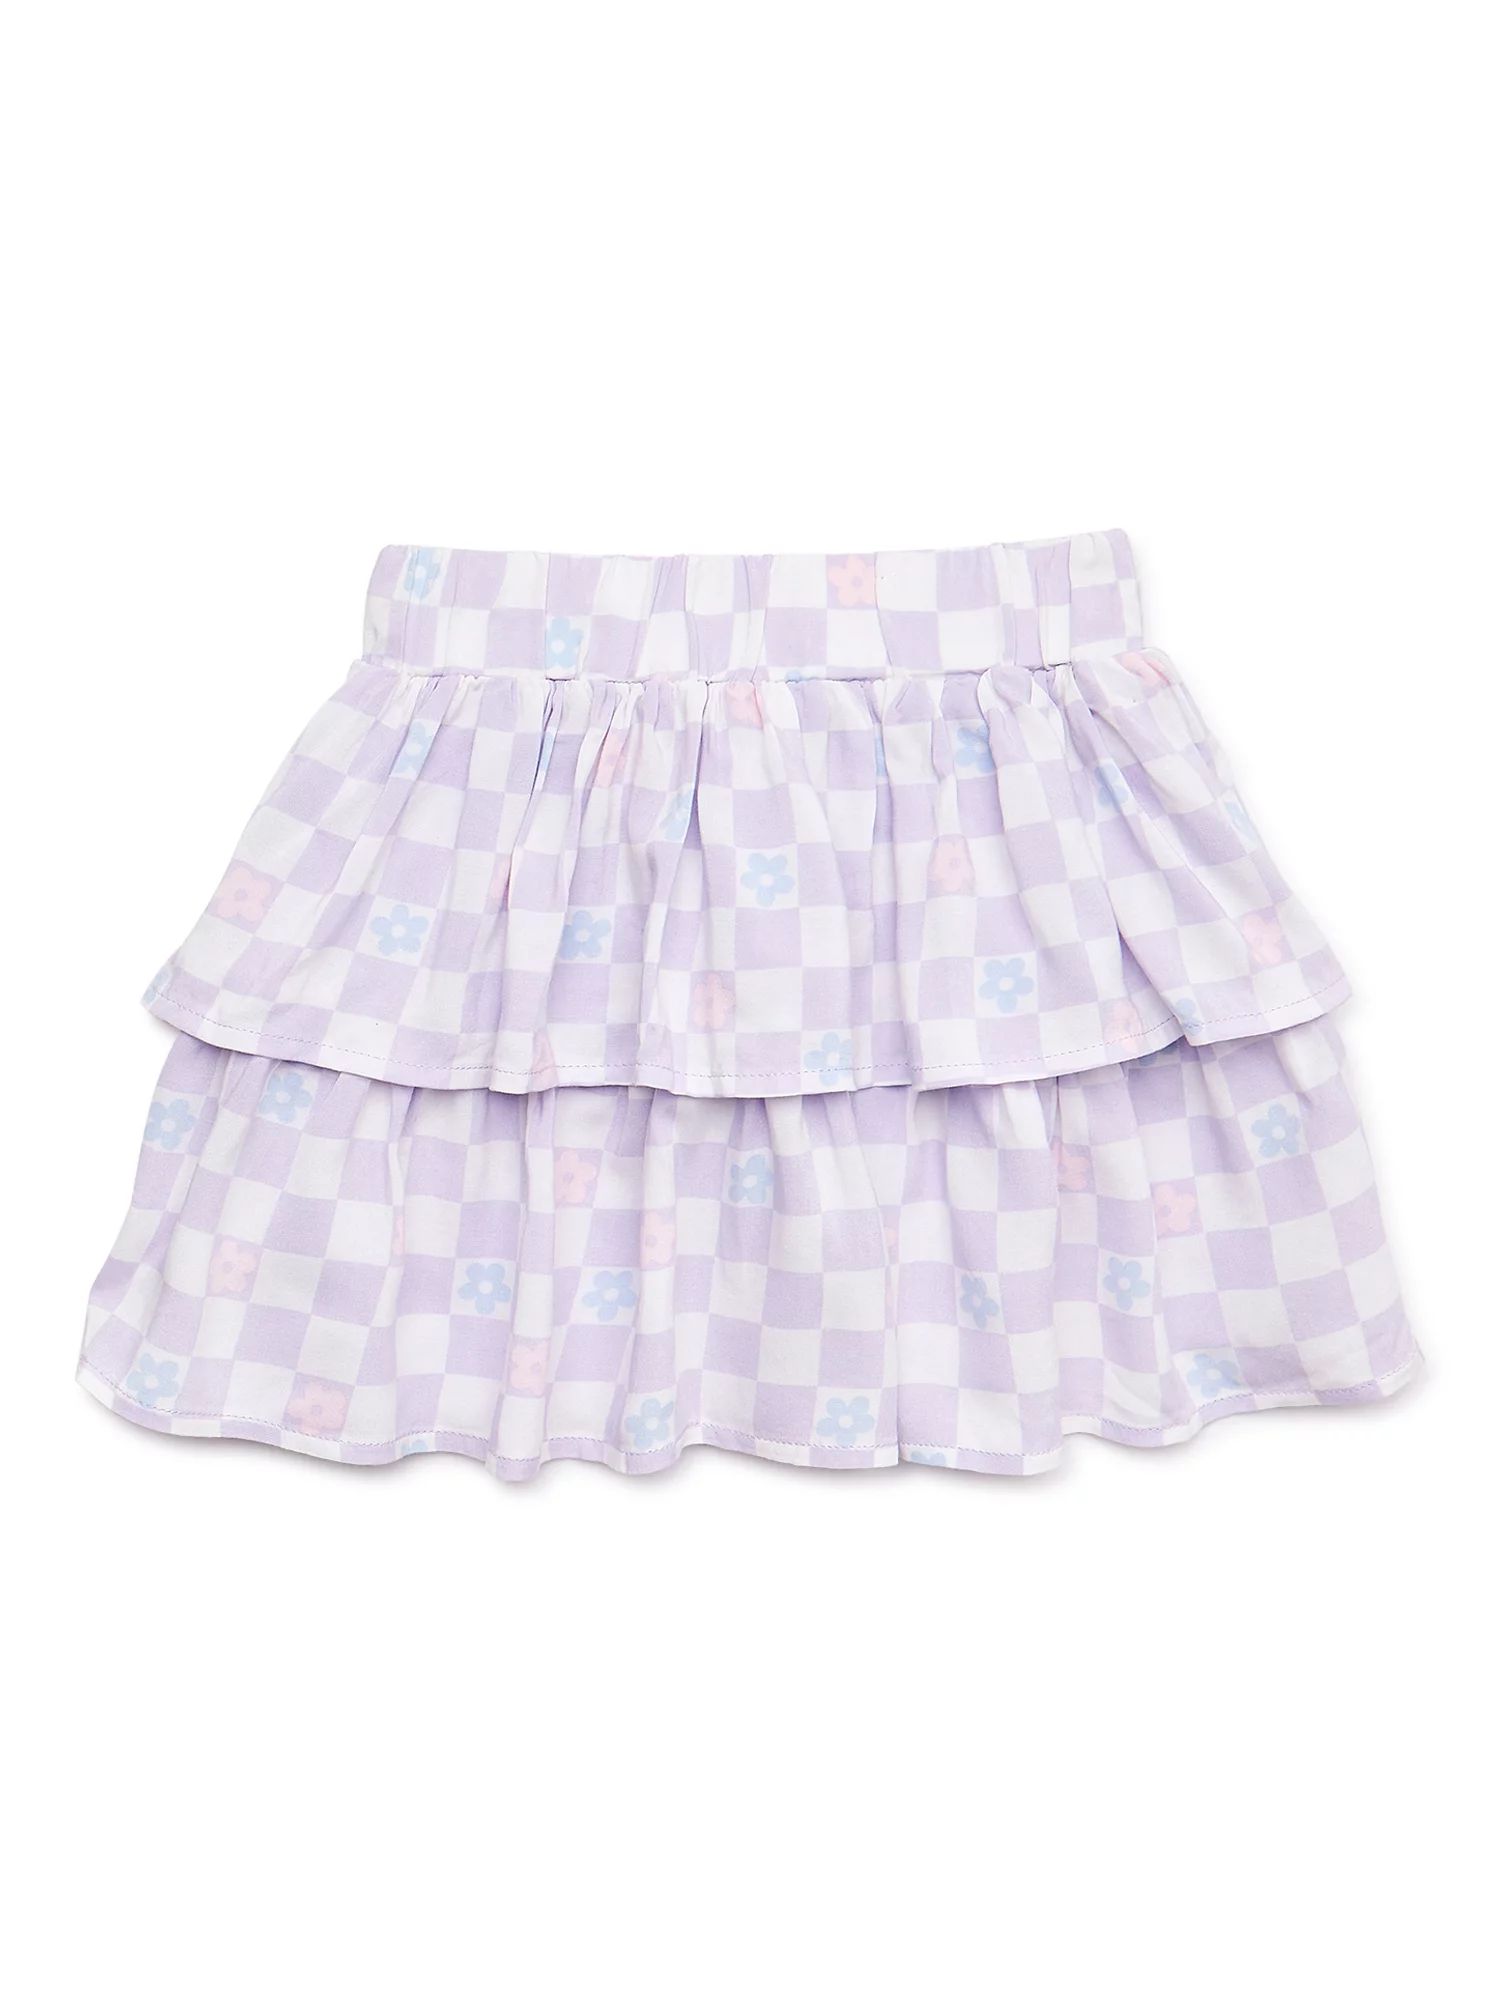 Garanimals Baby and Toddler Girls Tiered Skirt, Sizes 12M-5T | Walmart (US)